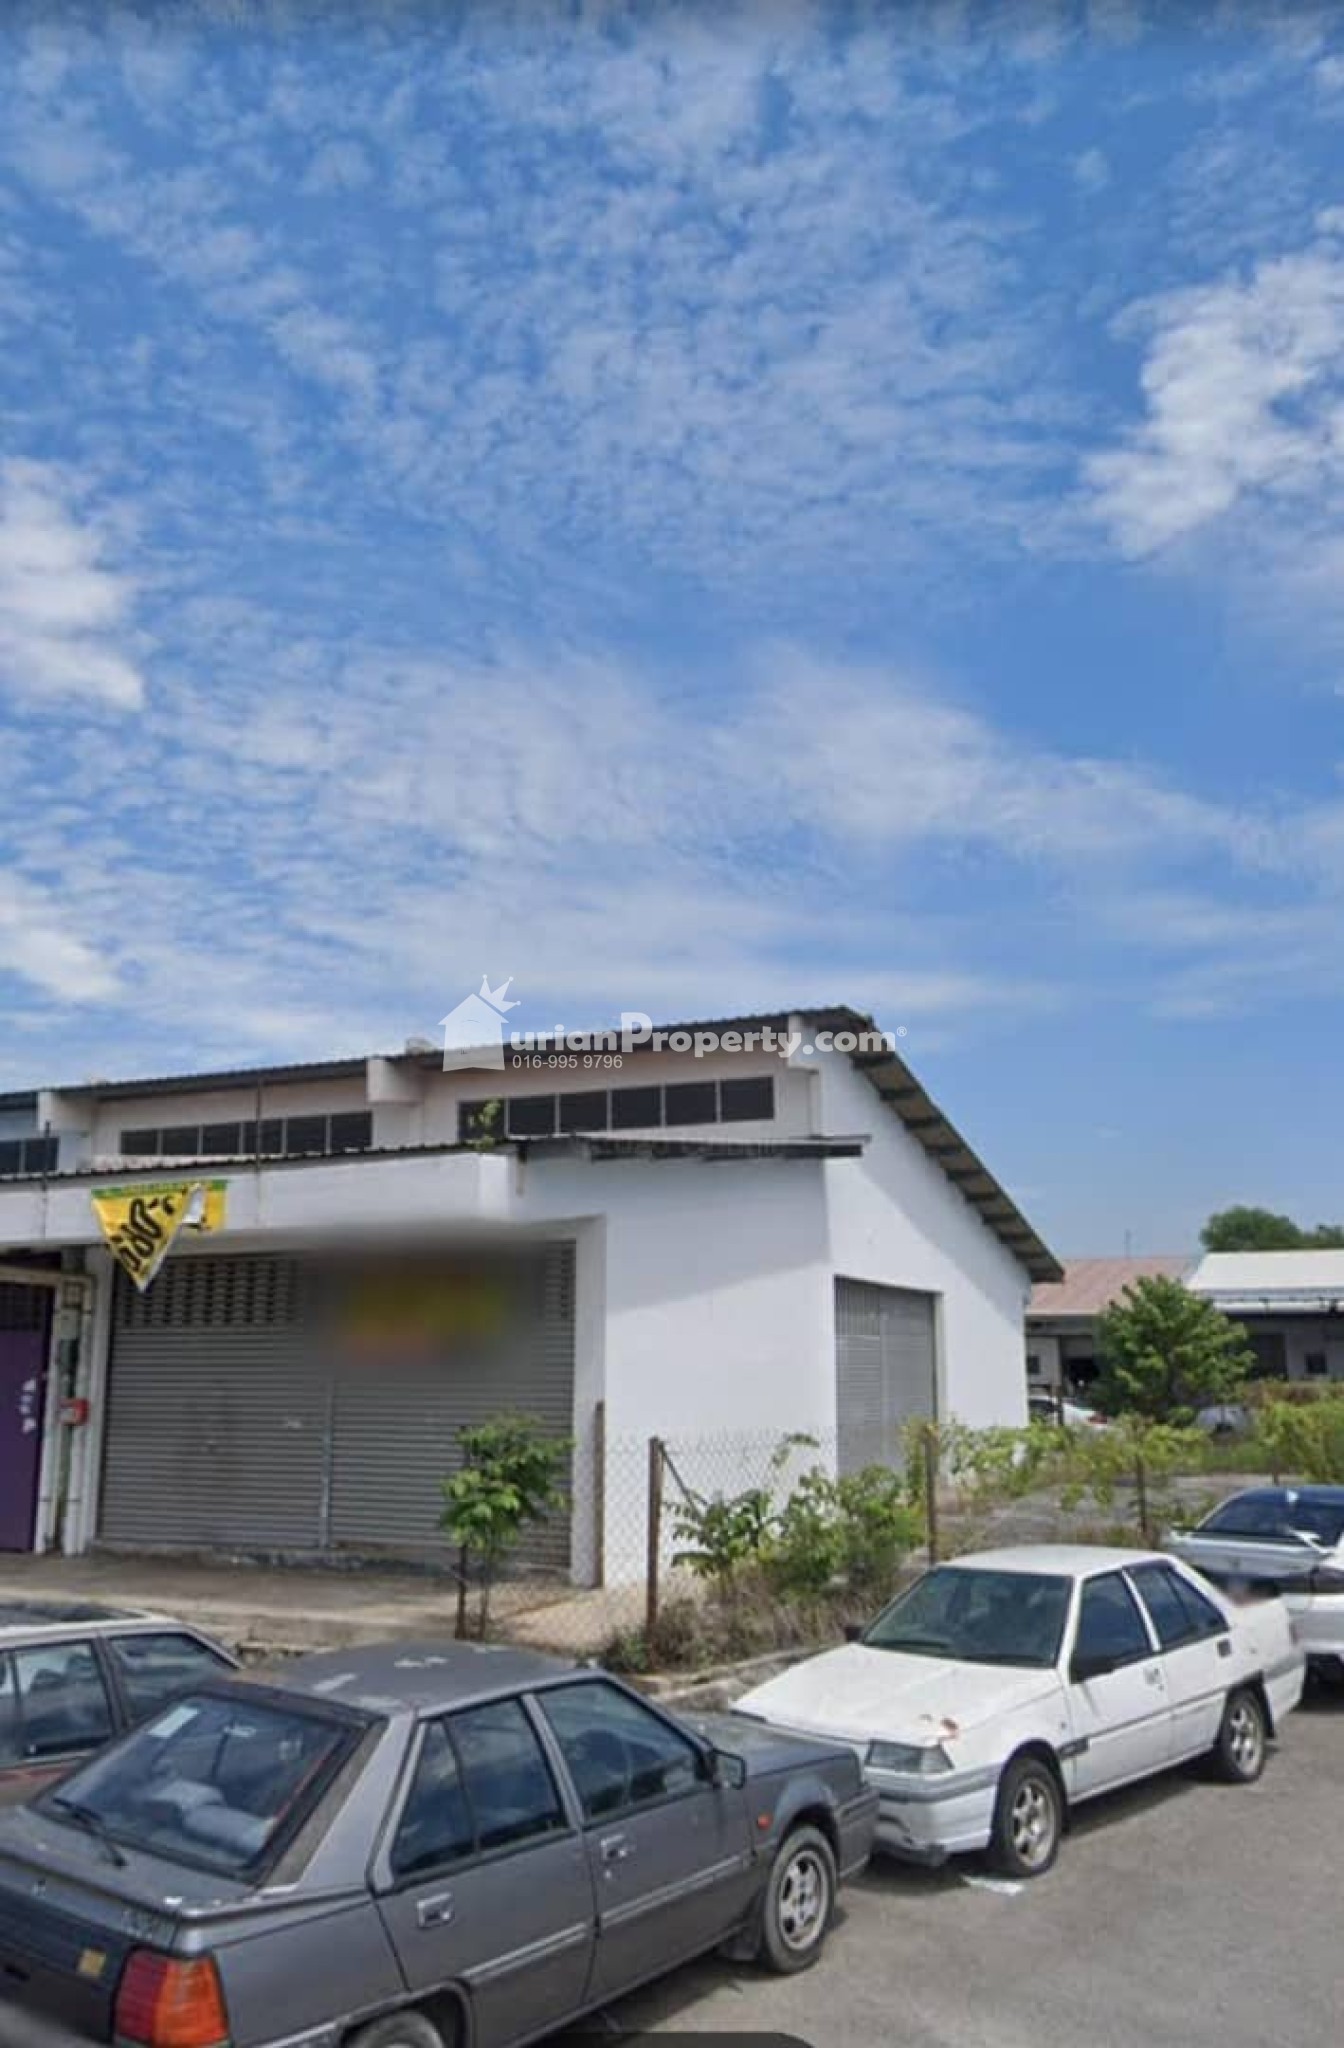 Terrace Factory For Sale at Bandar Bukit Puchong